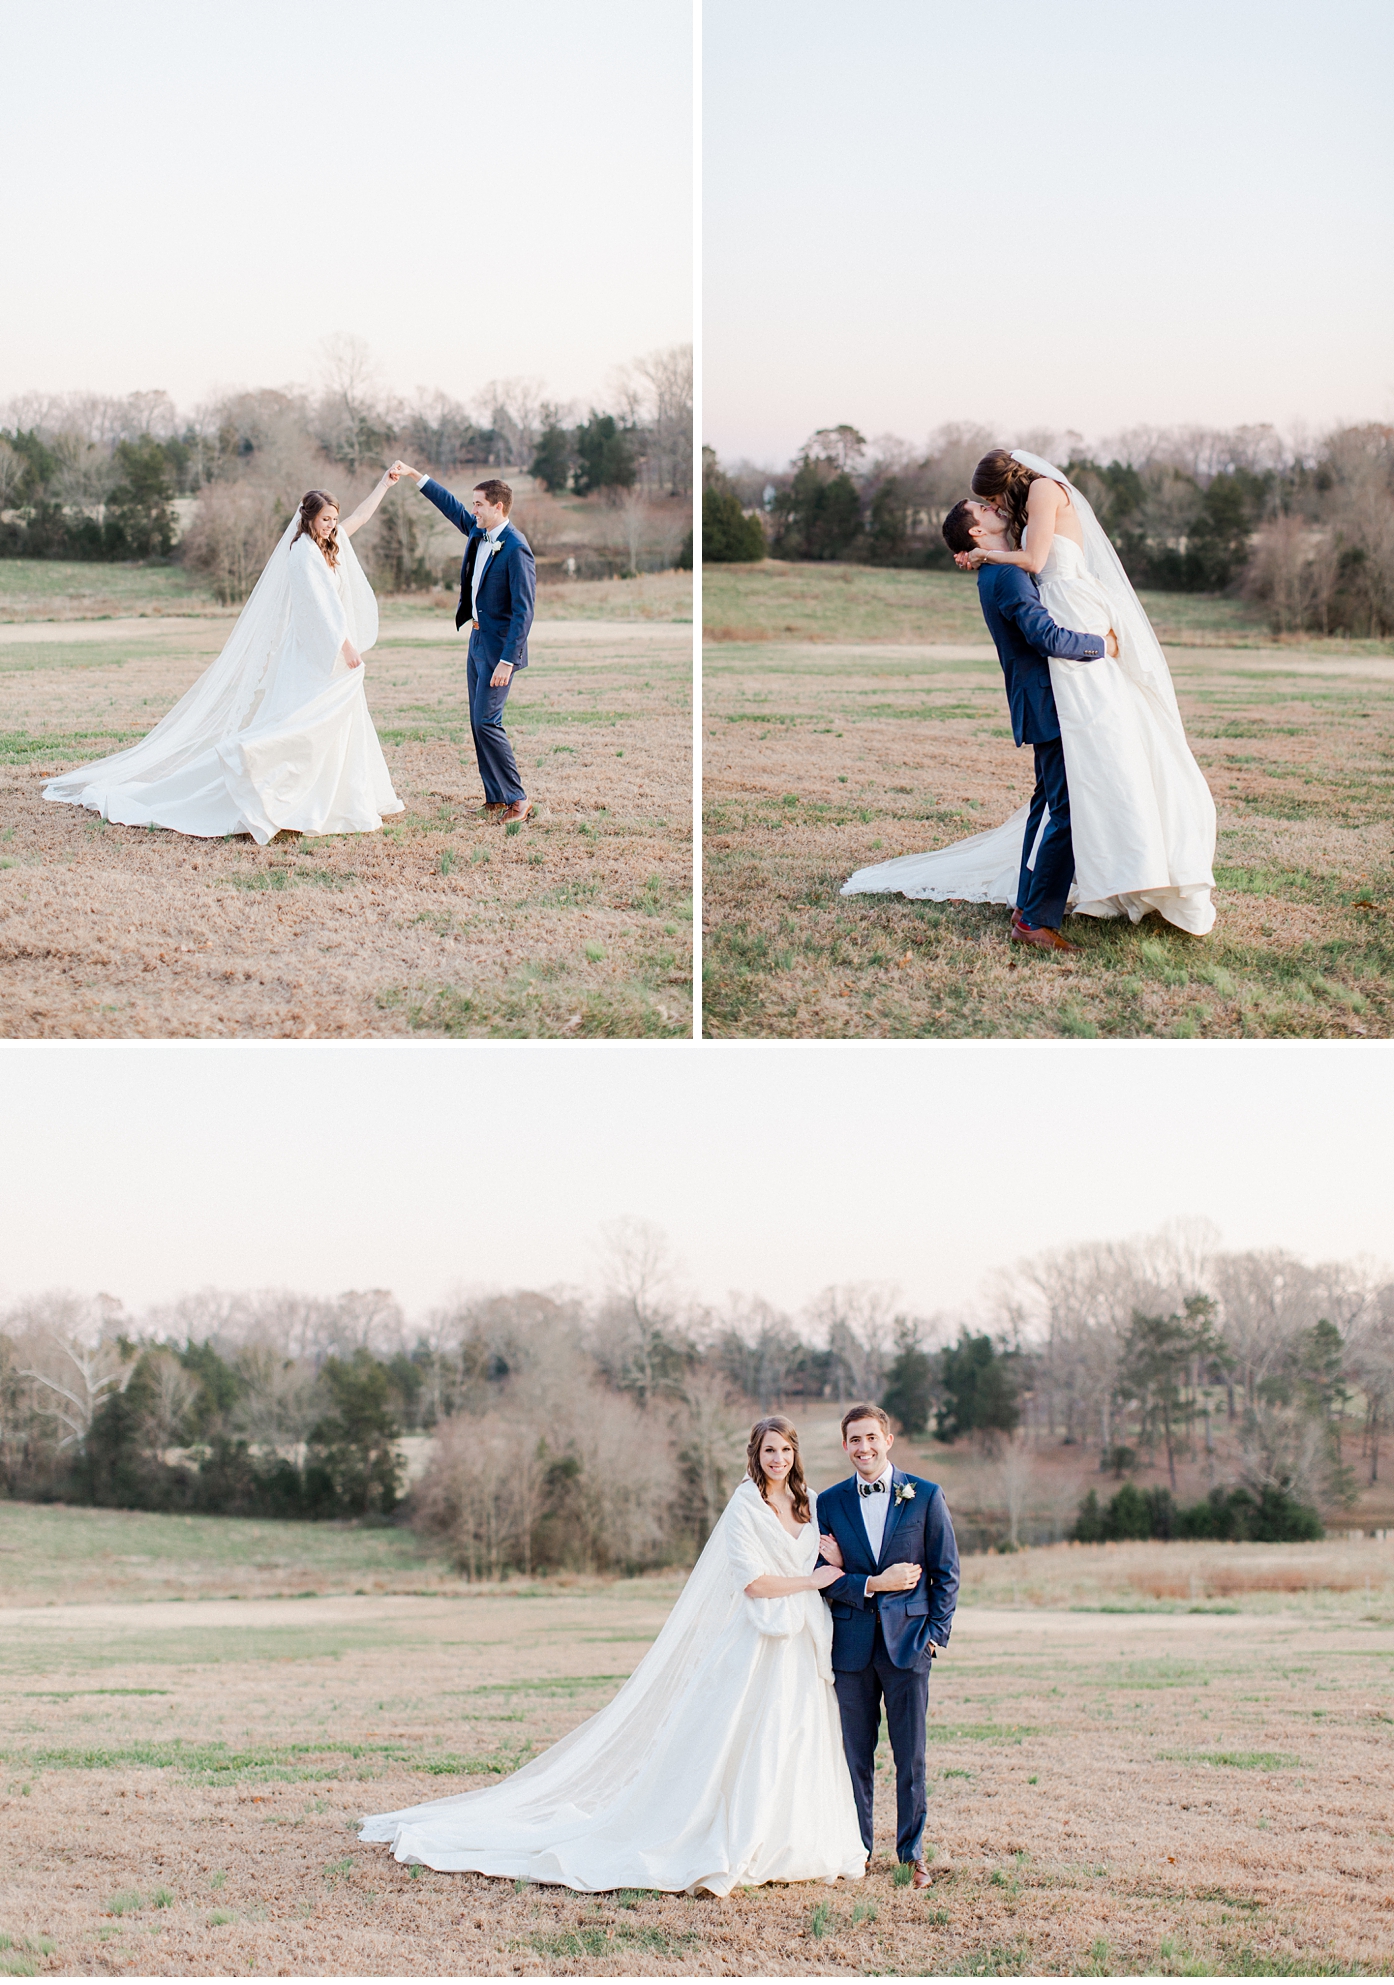 Greensboro NC Wedding at Summerfield Farms by Alisandra Photography